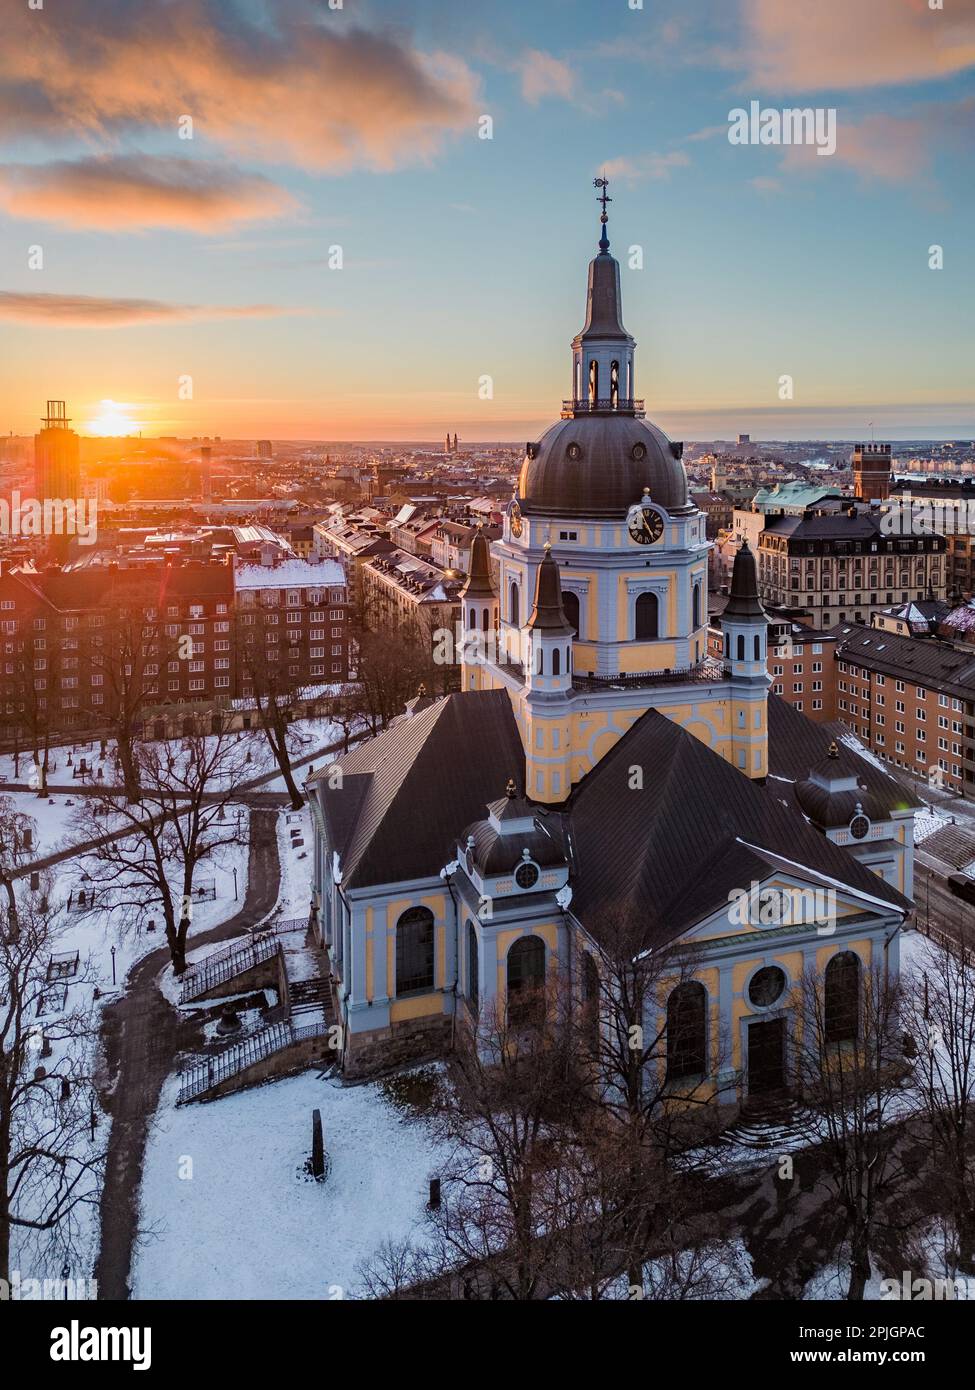 Luftaufnahme von Katarina kyrka (Katharinenkirche) im Zentrum Stockholms Stockfoto